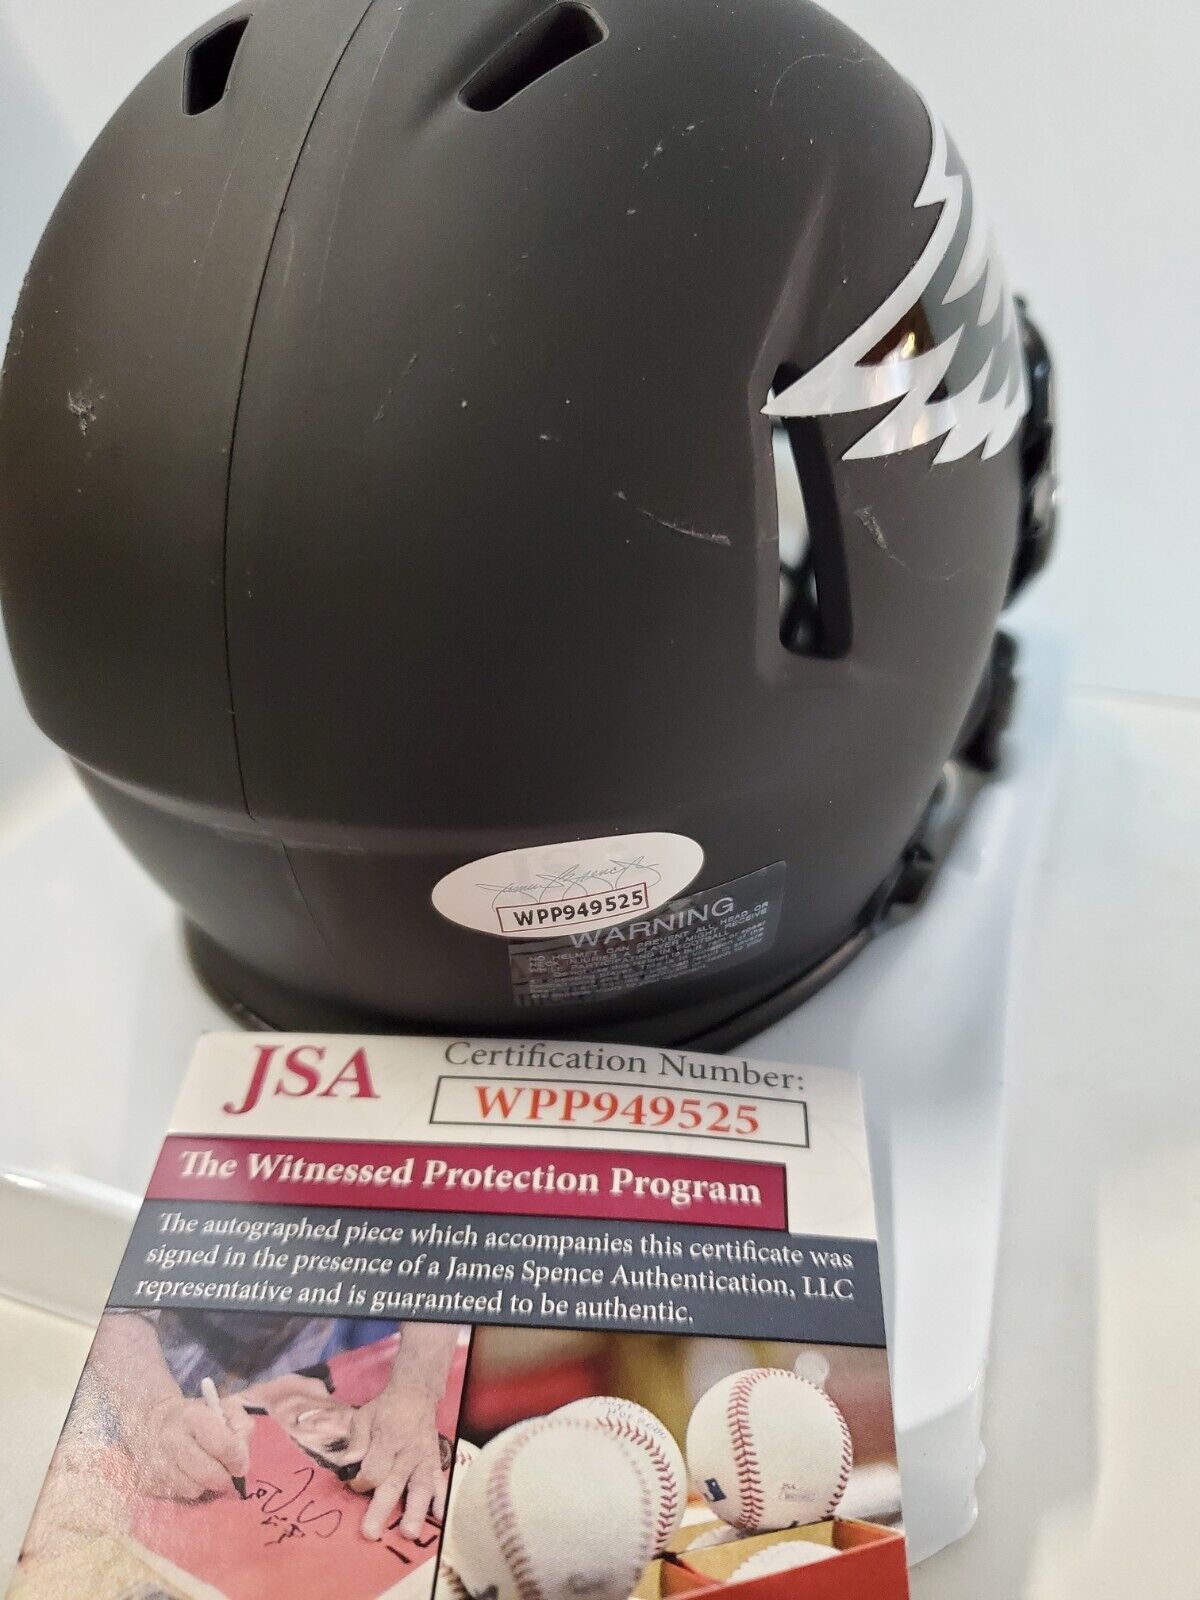 MVP Authentics Philadelphia Eagles Aj Brown Autographed Signed Eclipse Mini Helmet Jsa Coa 117 sports jersey framing , jersey framing